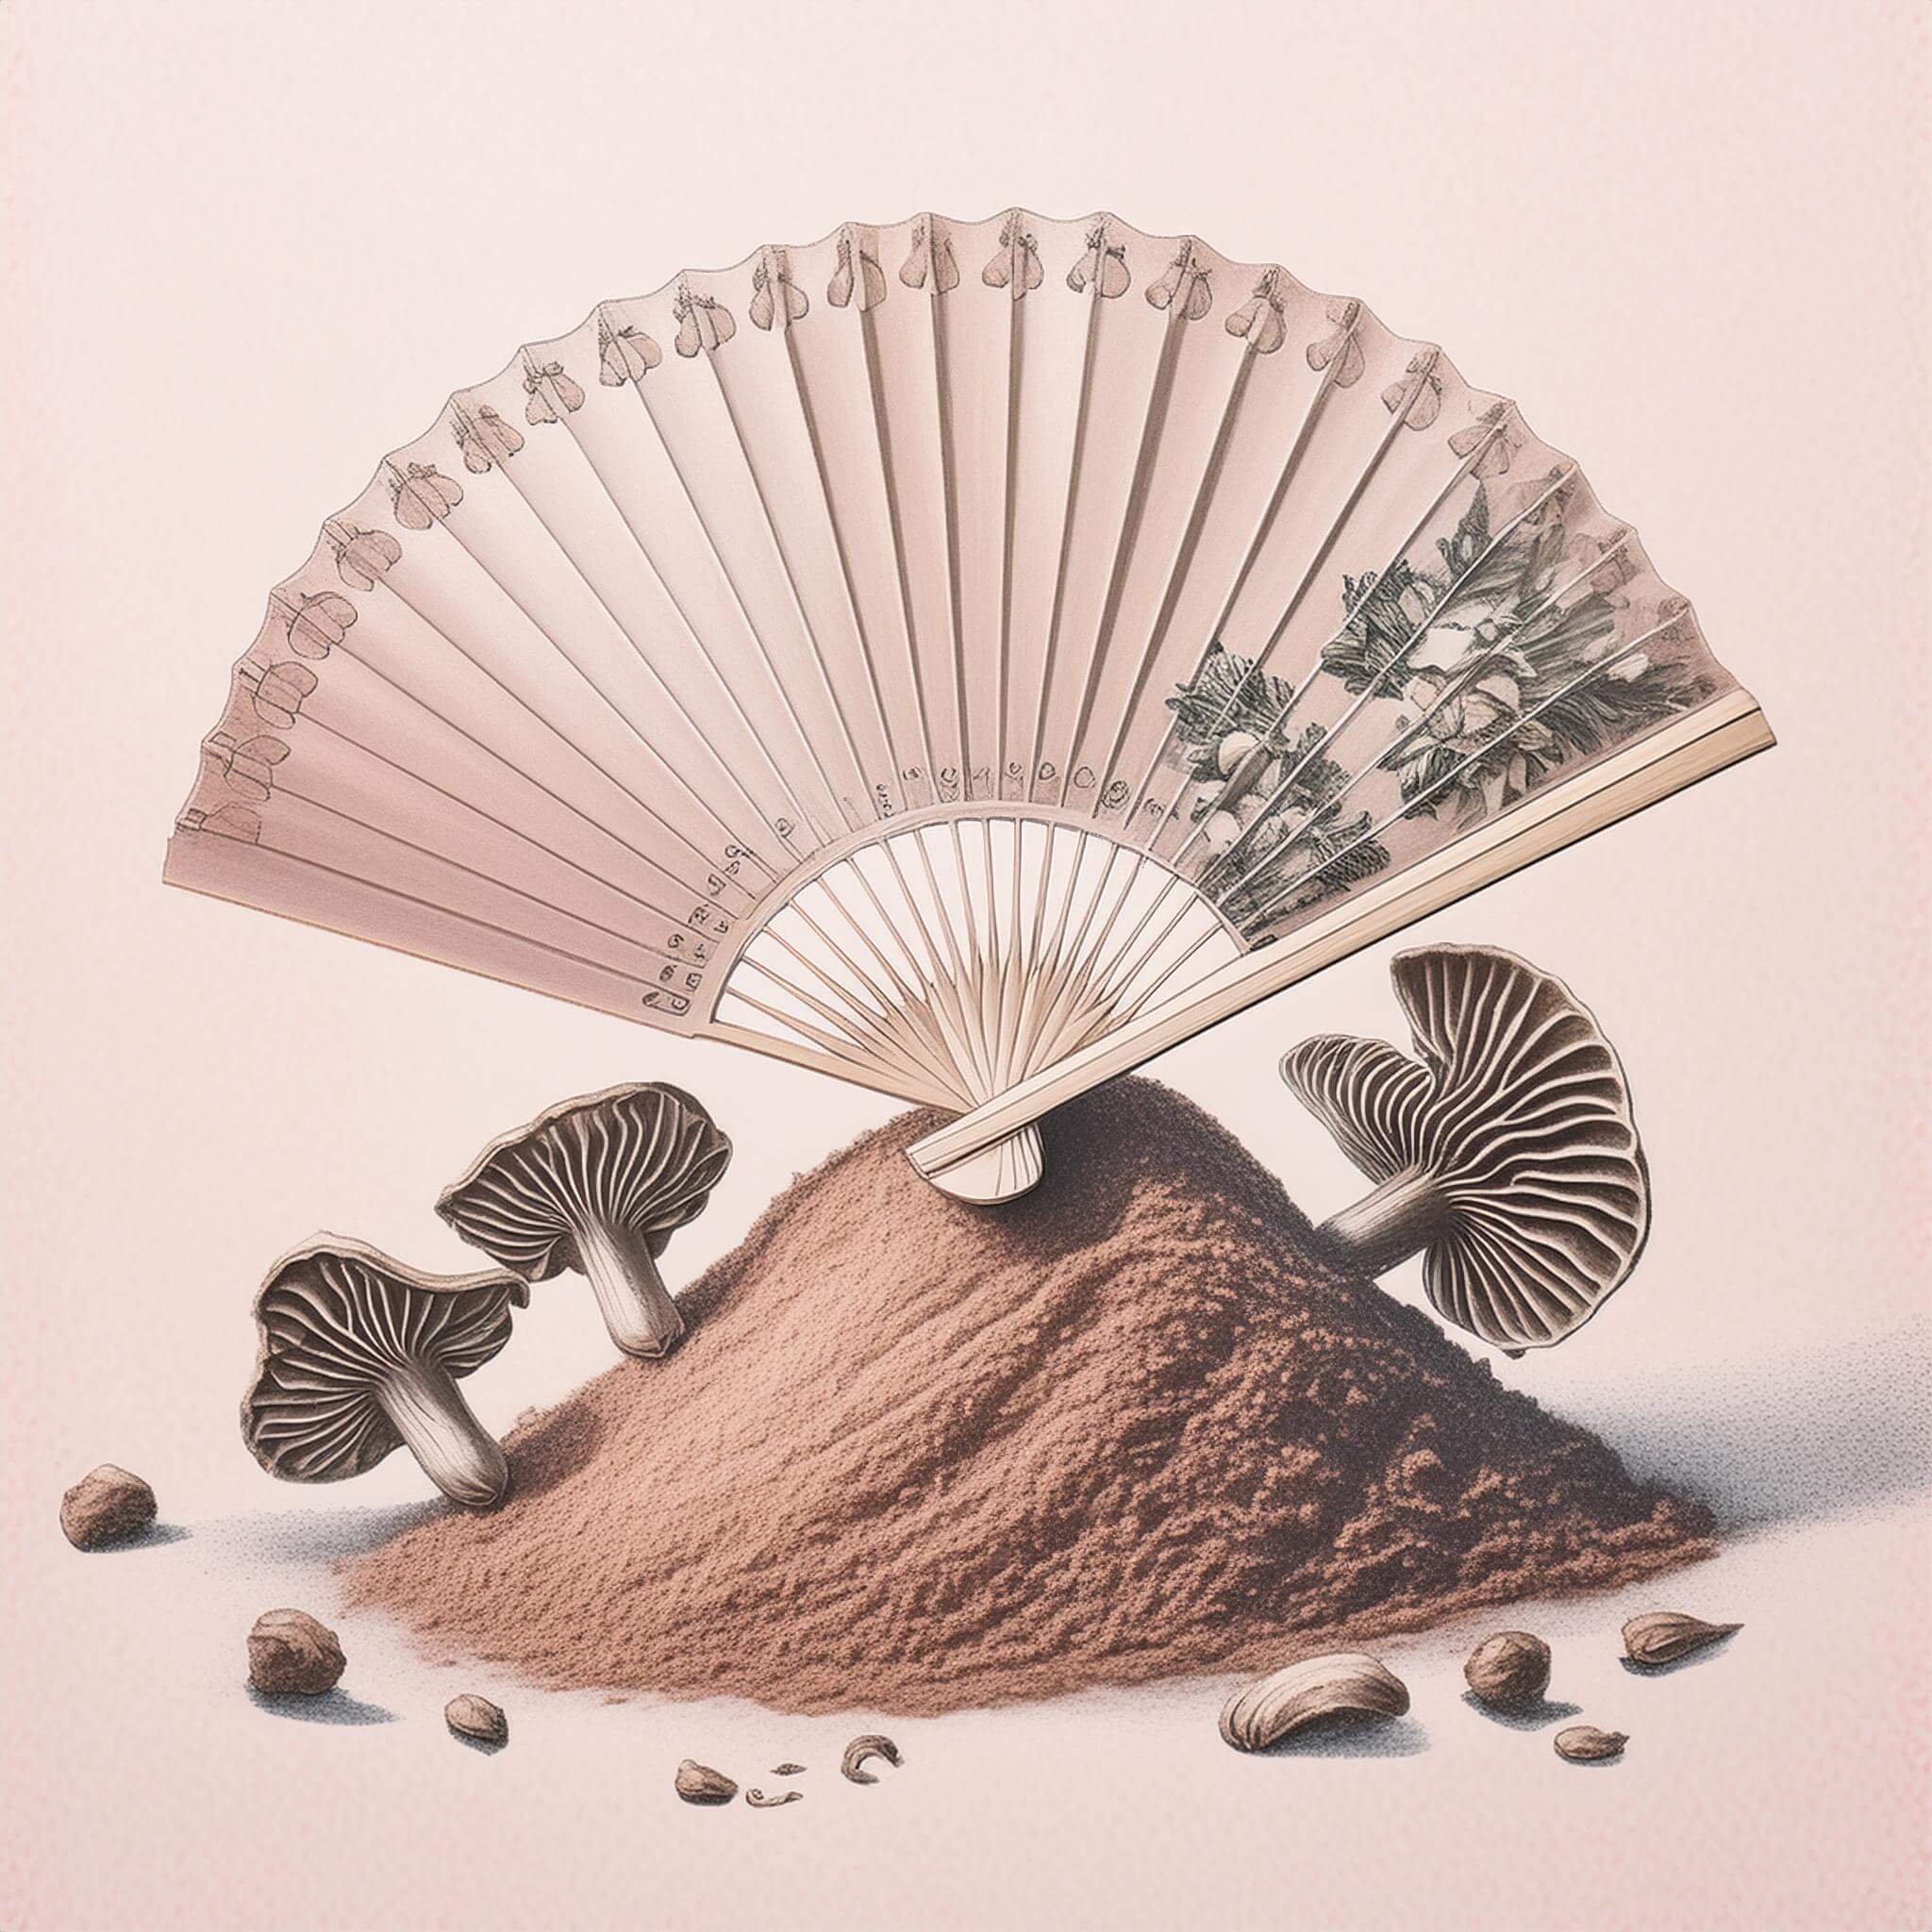 drawing of mushrooms and mushroom powder and a fan illustrating mushrooms for menopause